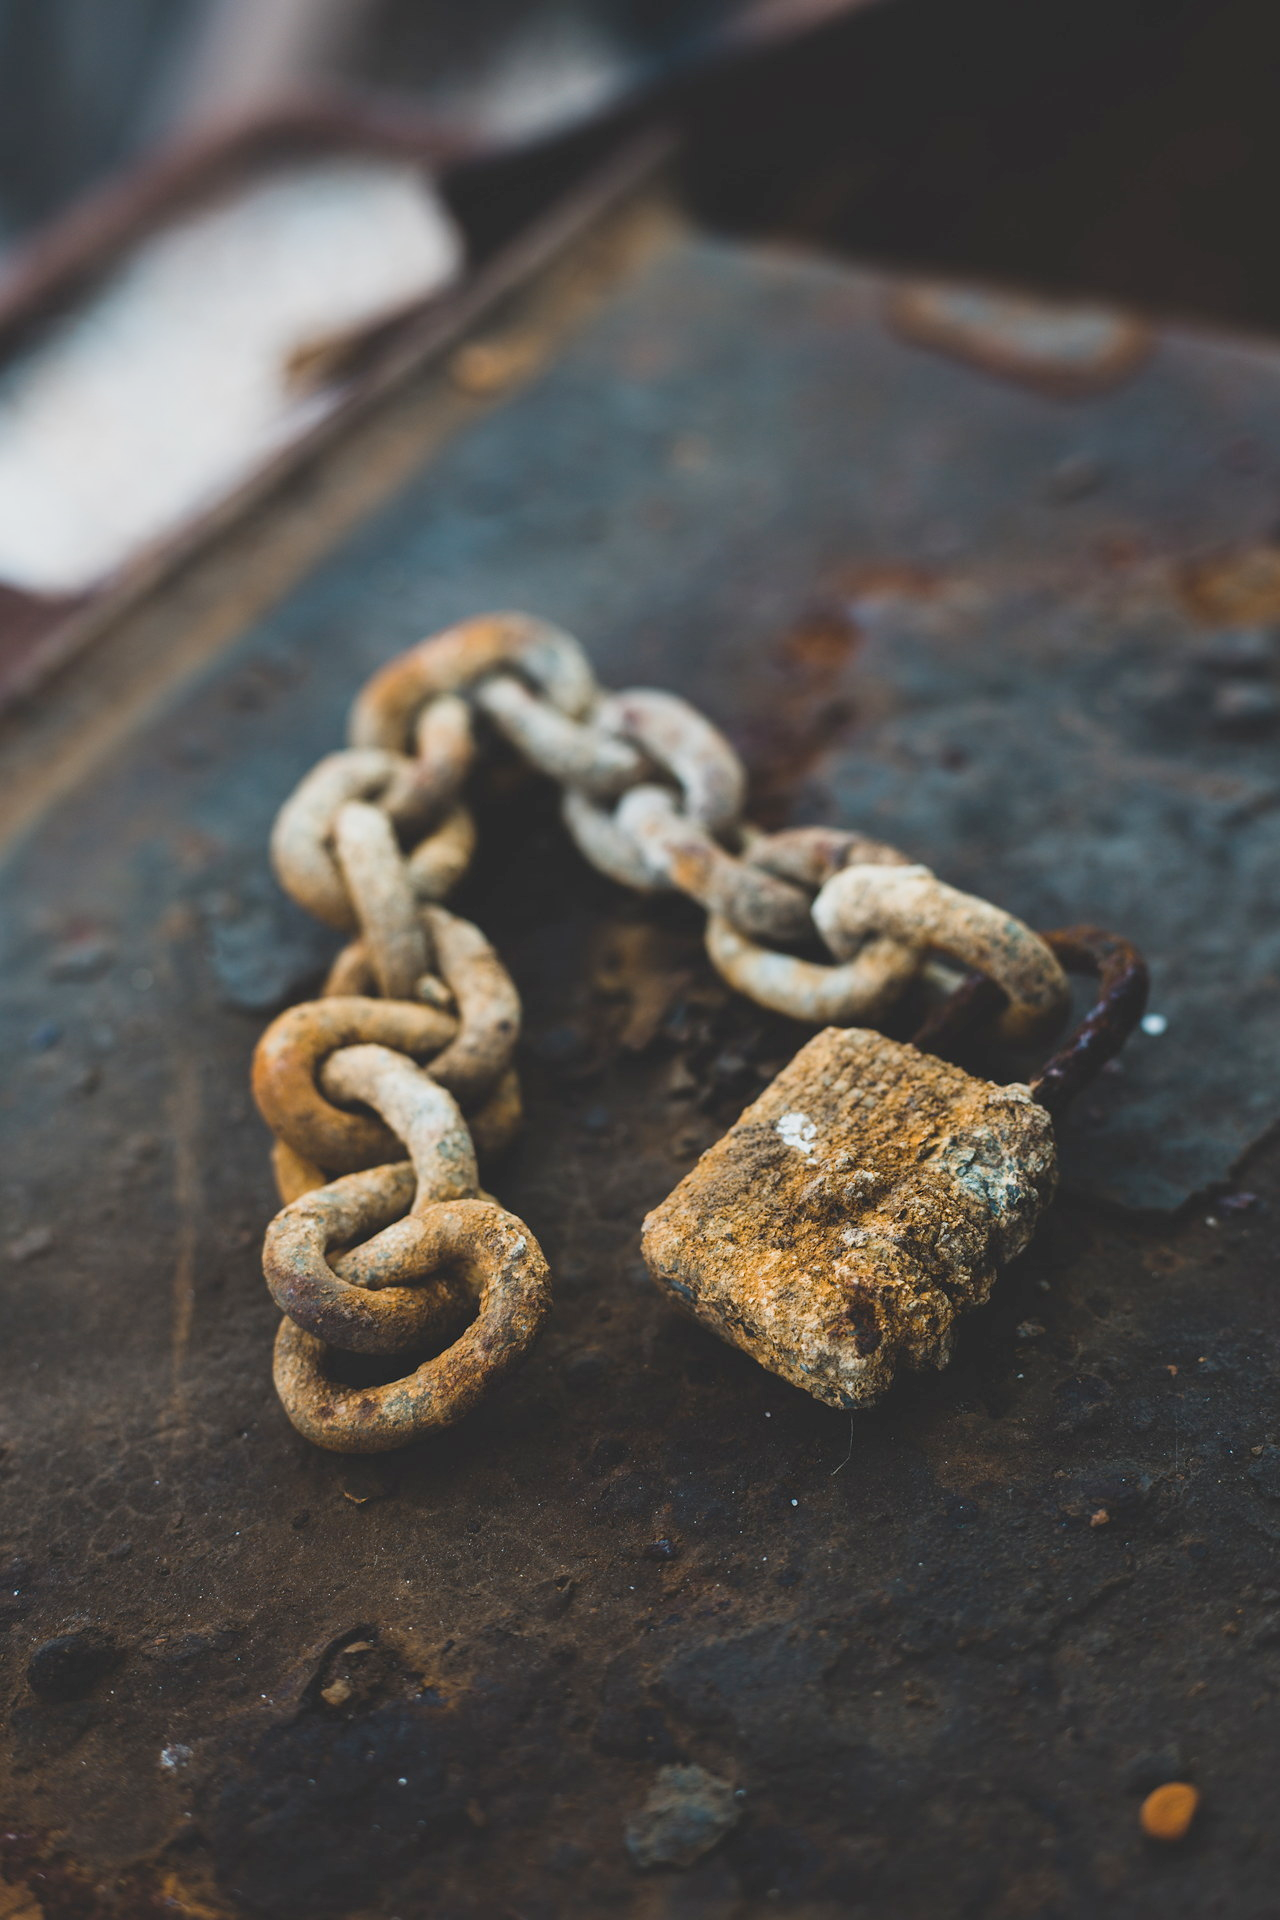 Rusty padlock and chain